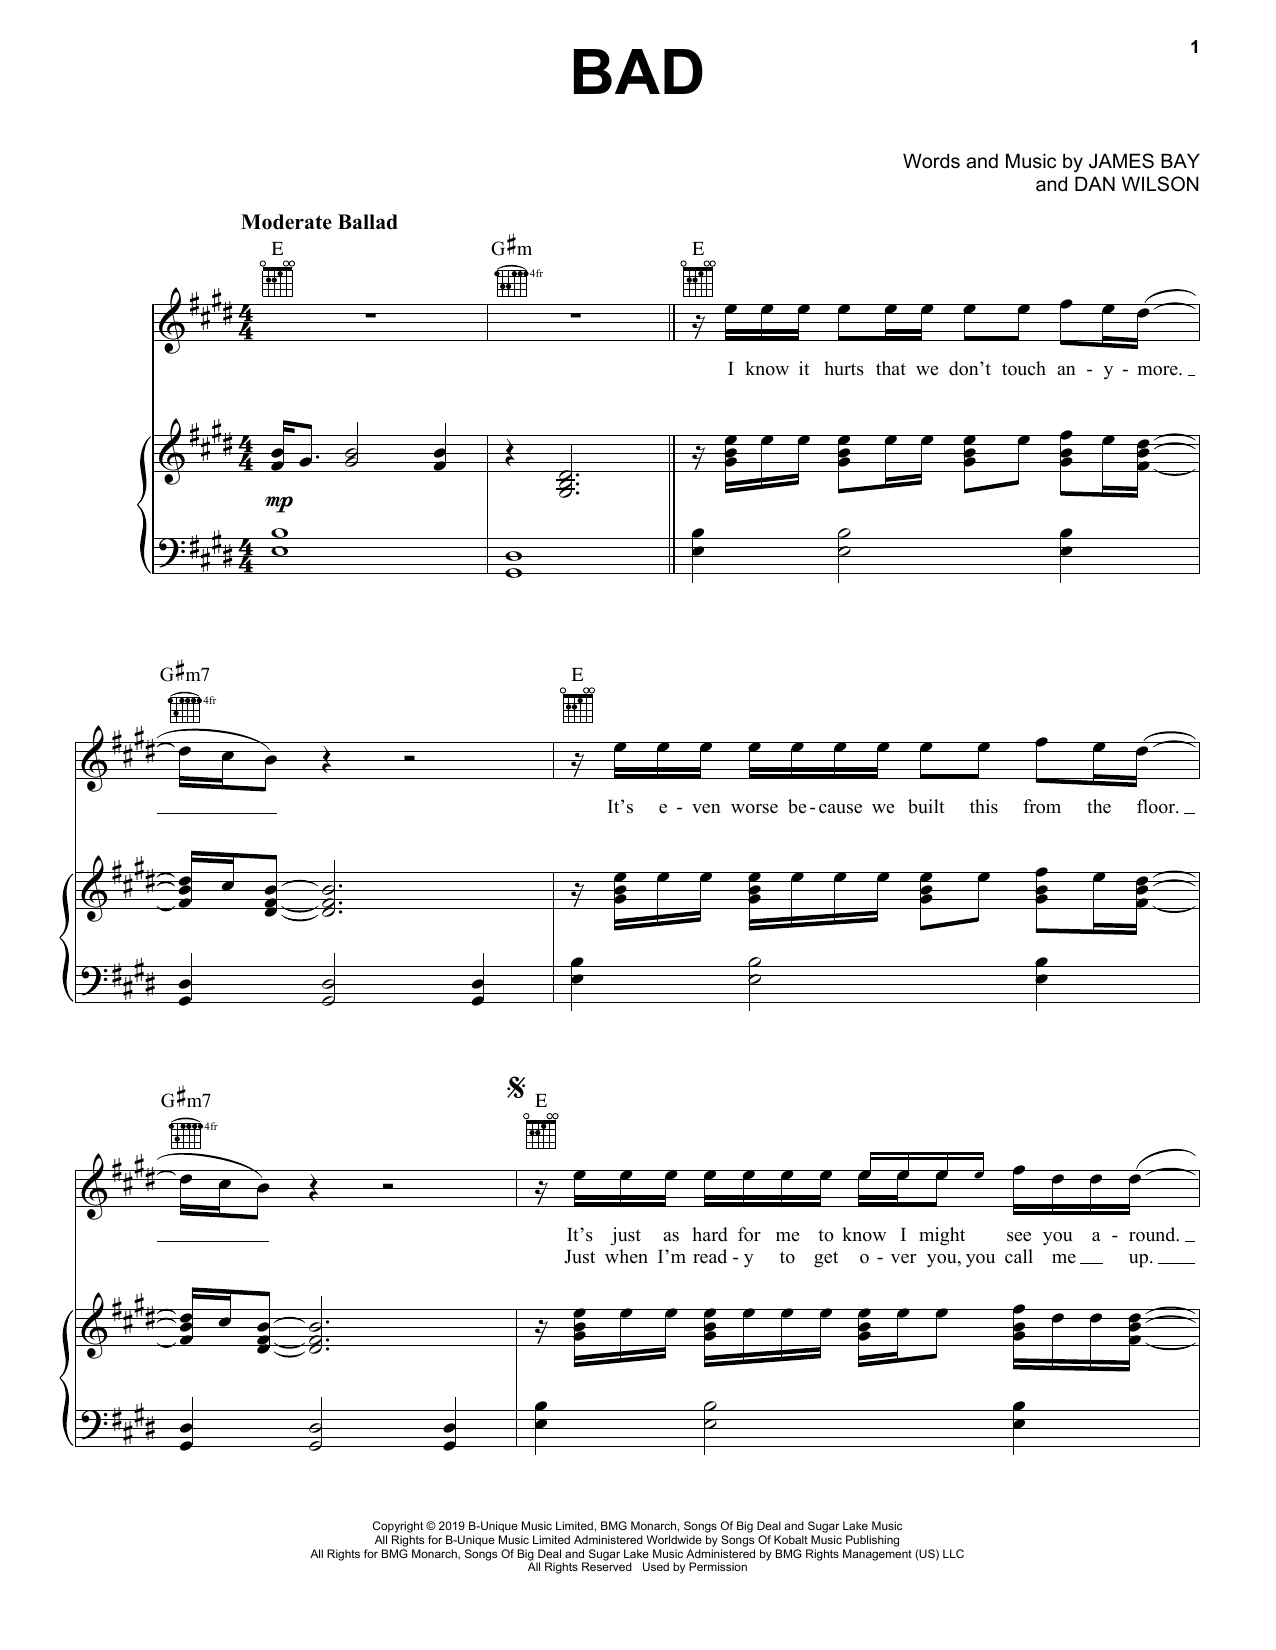 James Bay Bad Sheet Music Notes & Chords for Guitar Chords/Lyrics - Download or Print PDF